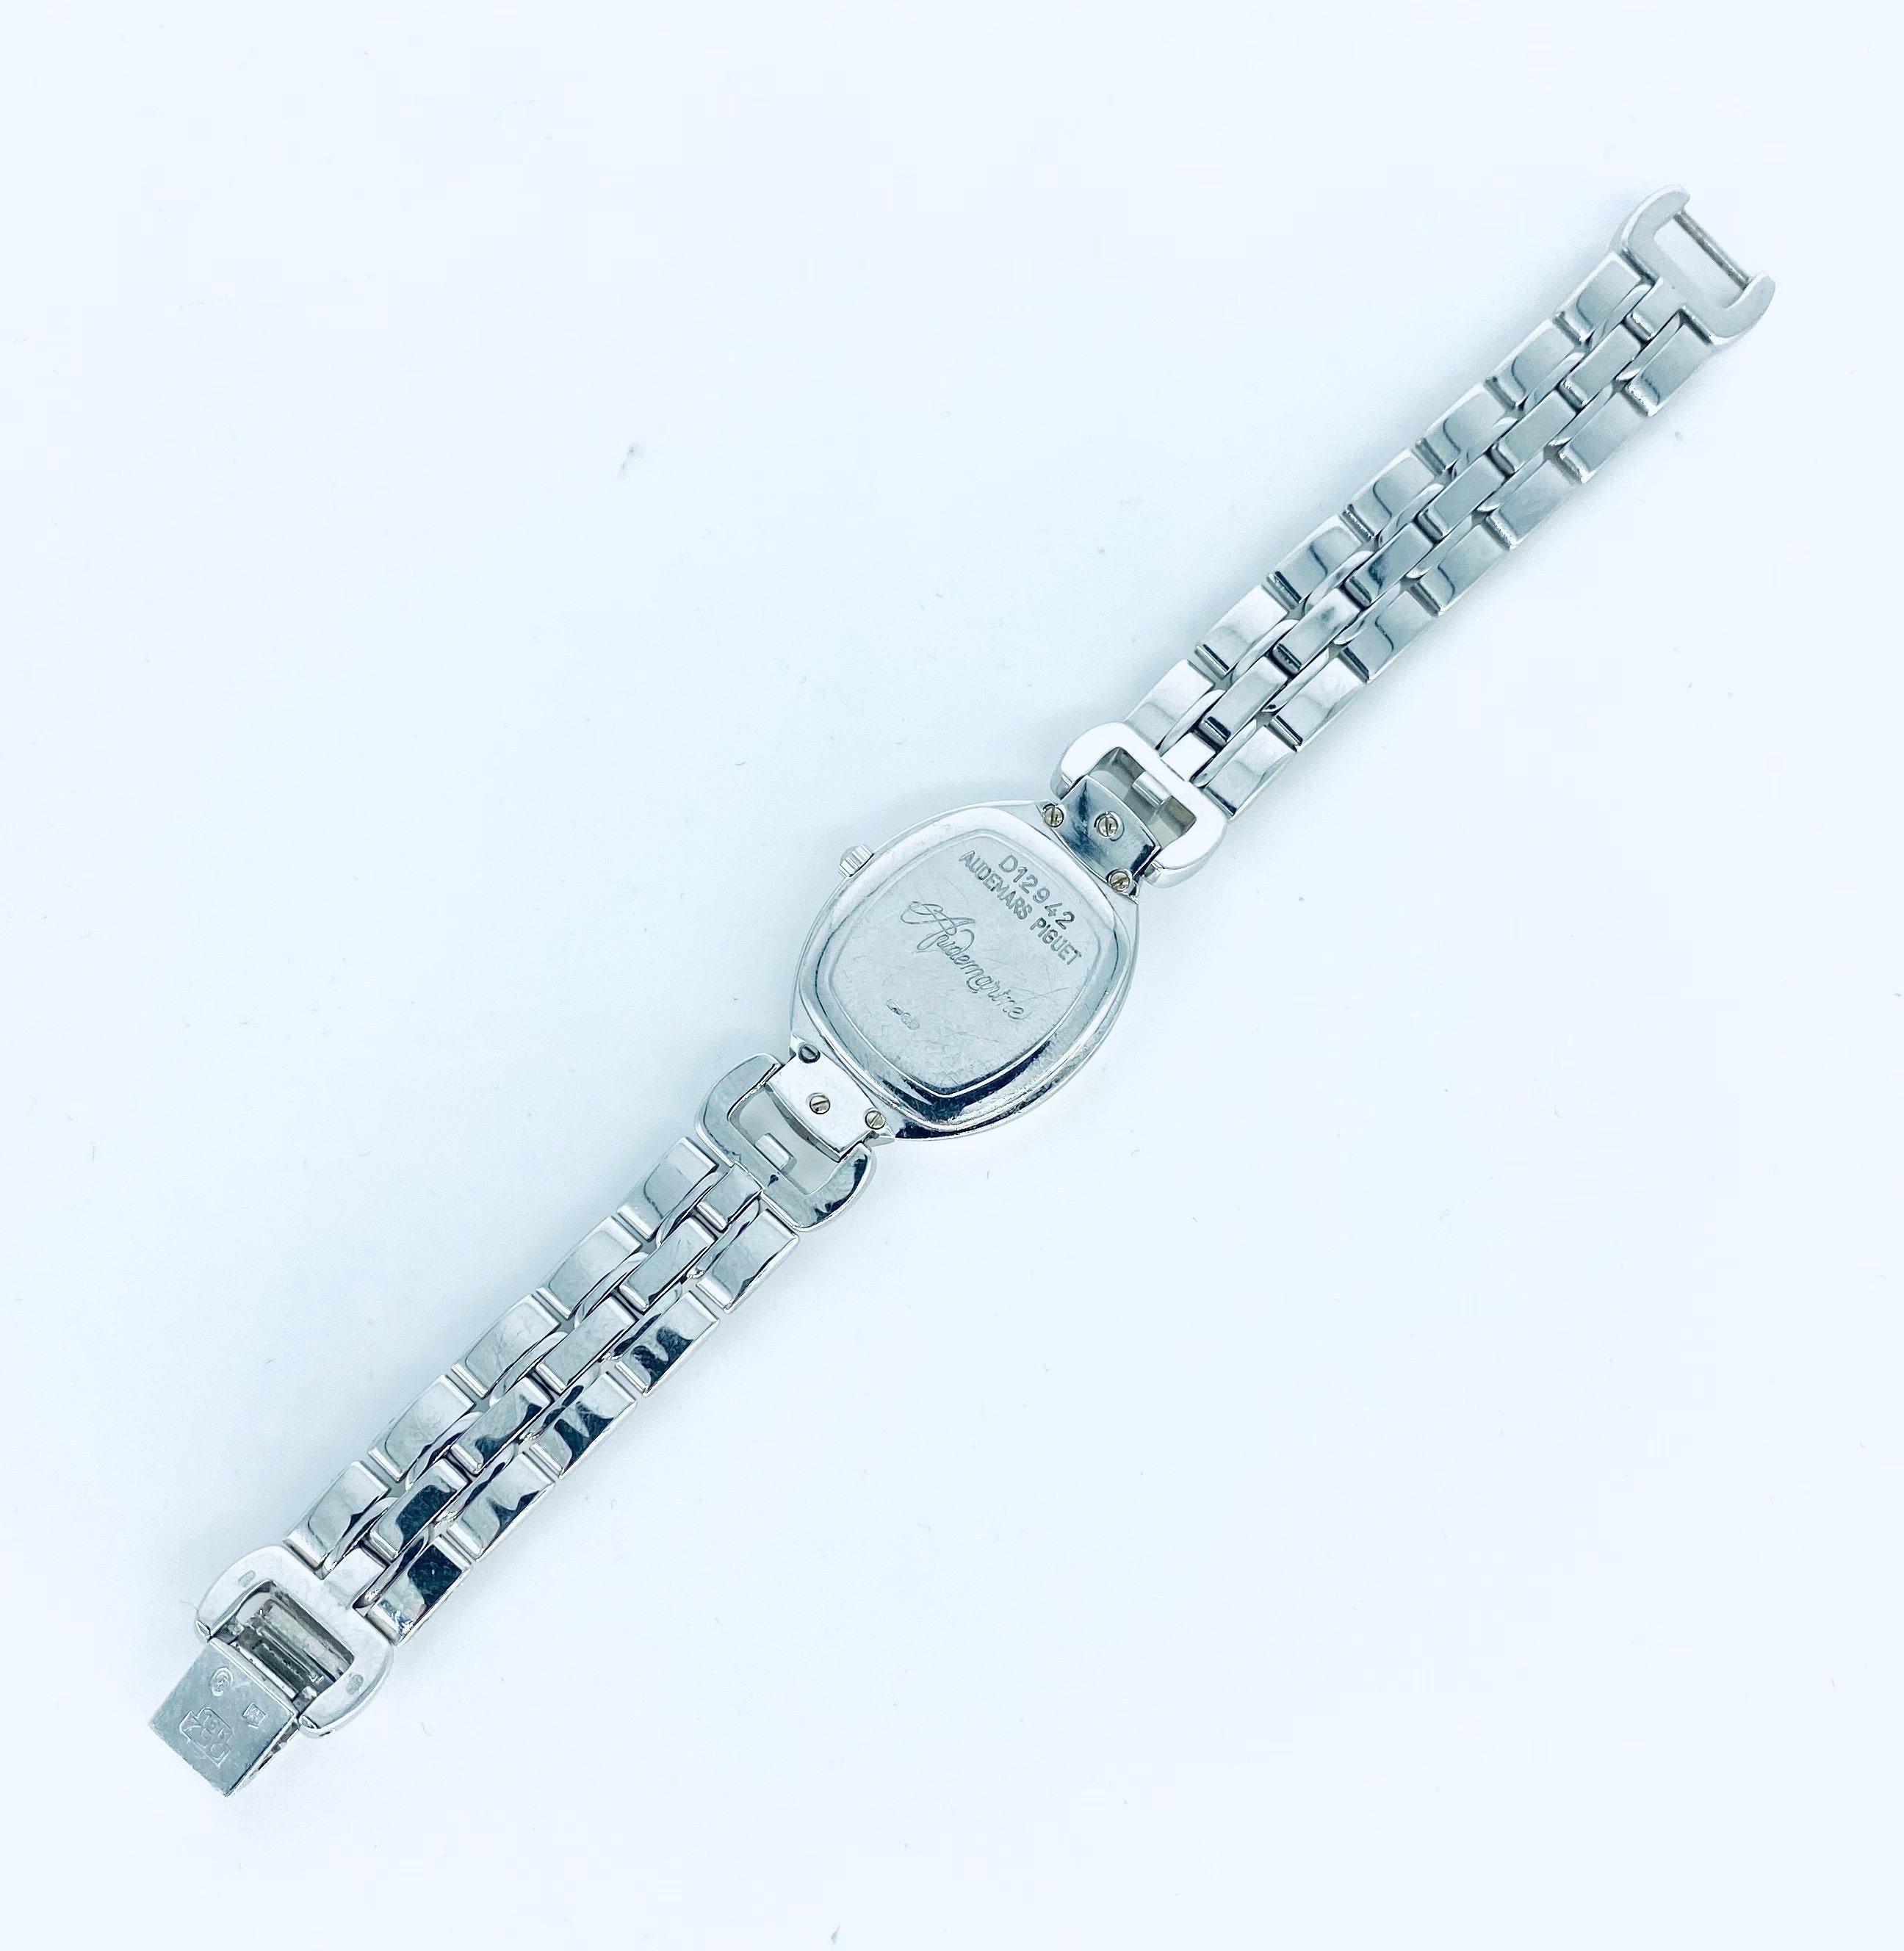 myima quartz watch price